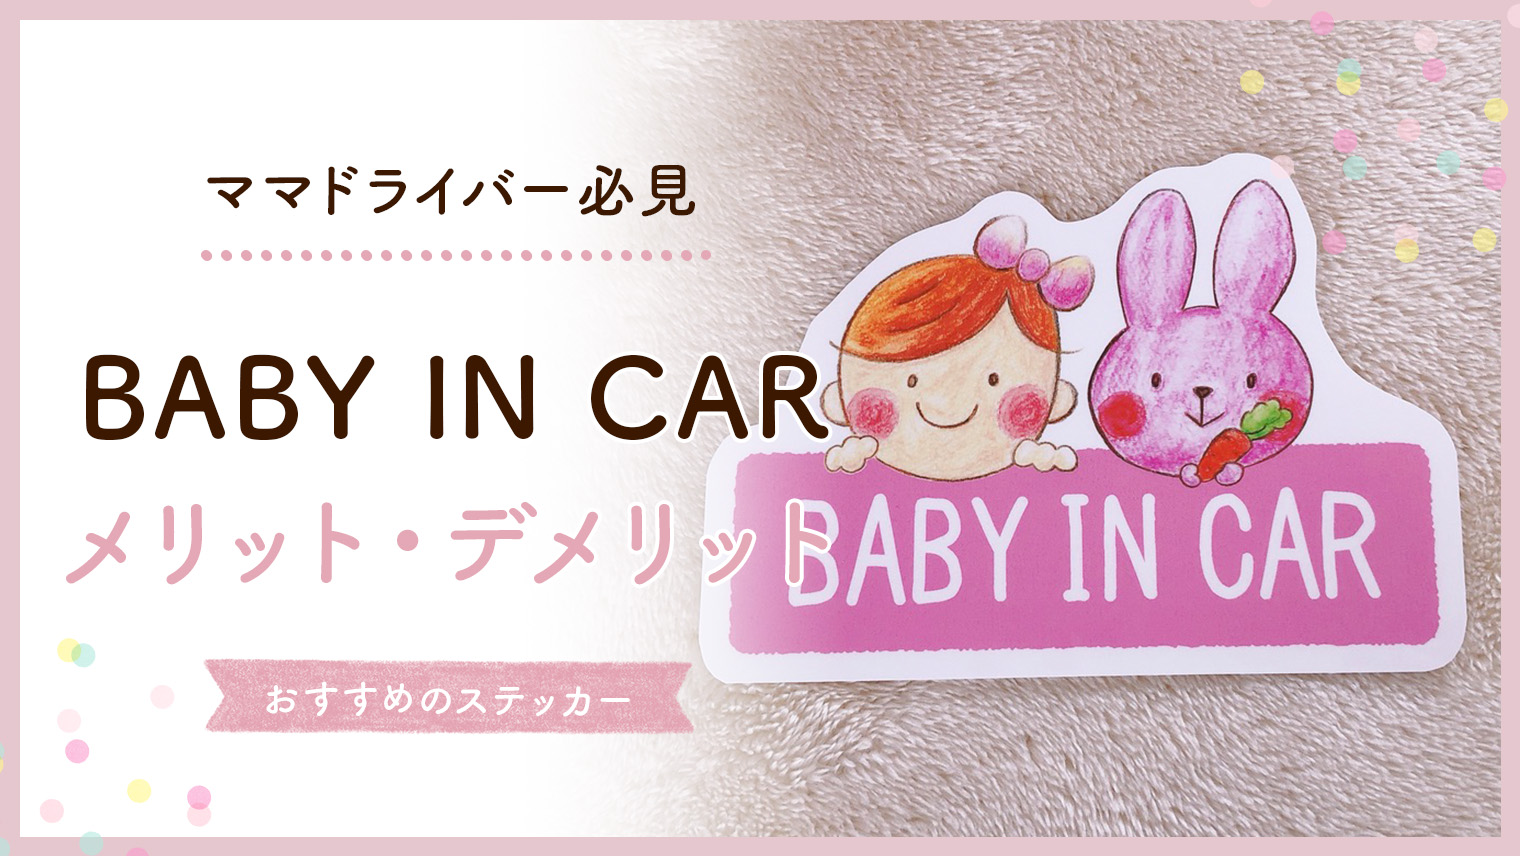 「BABY IN CAR」ステッカーの意味とは？メリットとデメリットを紹介